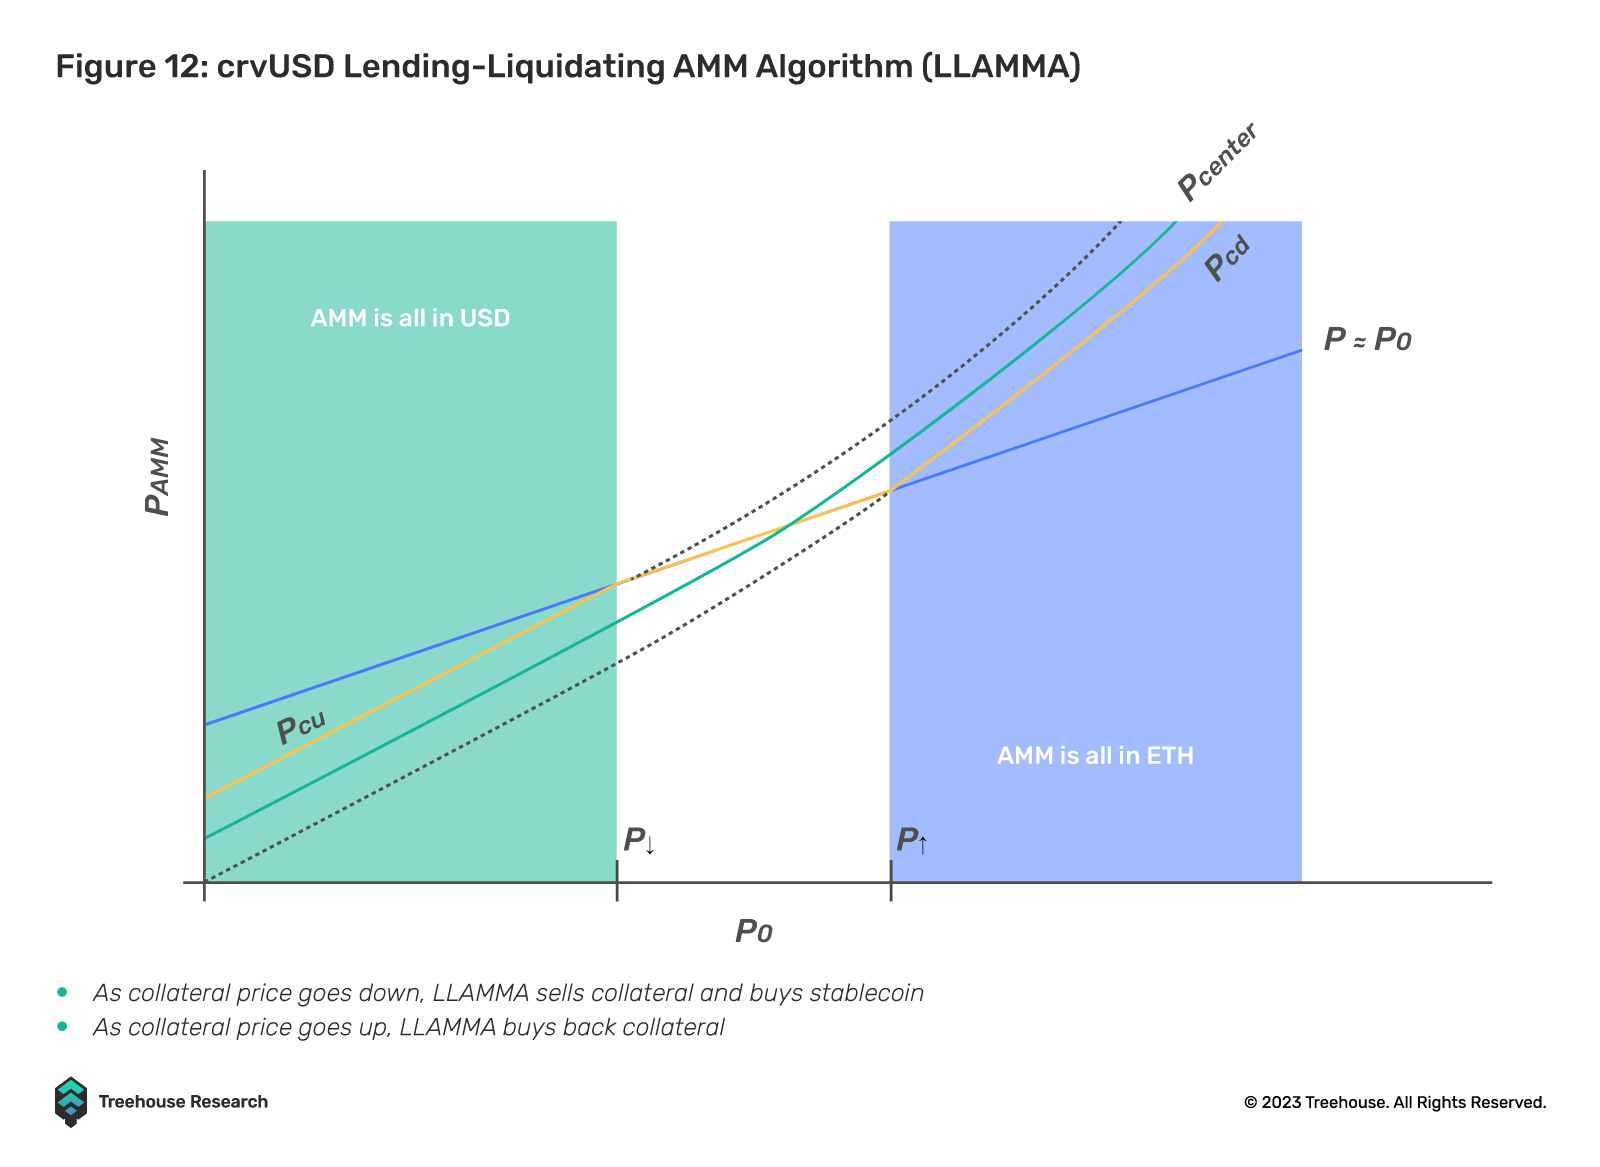 crvUSD lending-liquidating amm algorithm